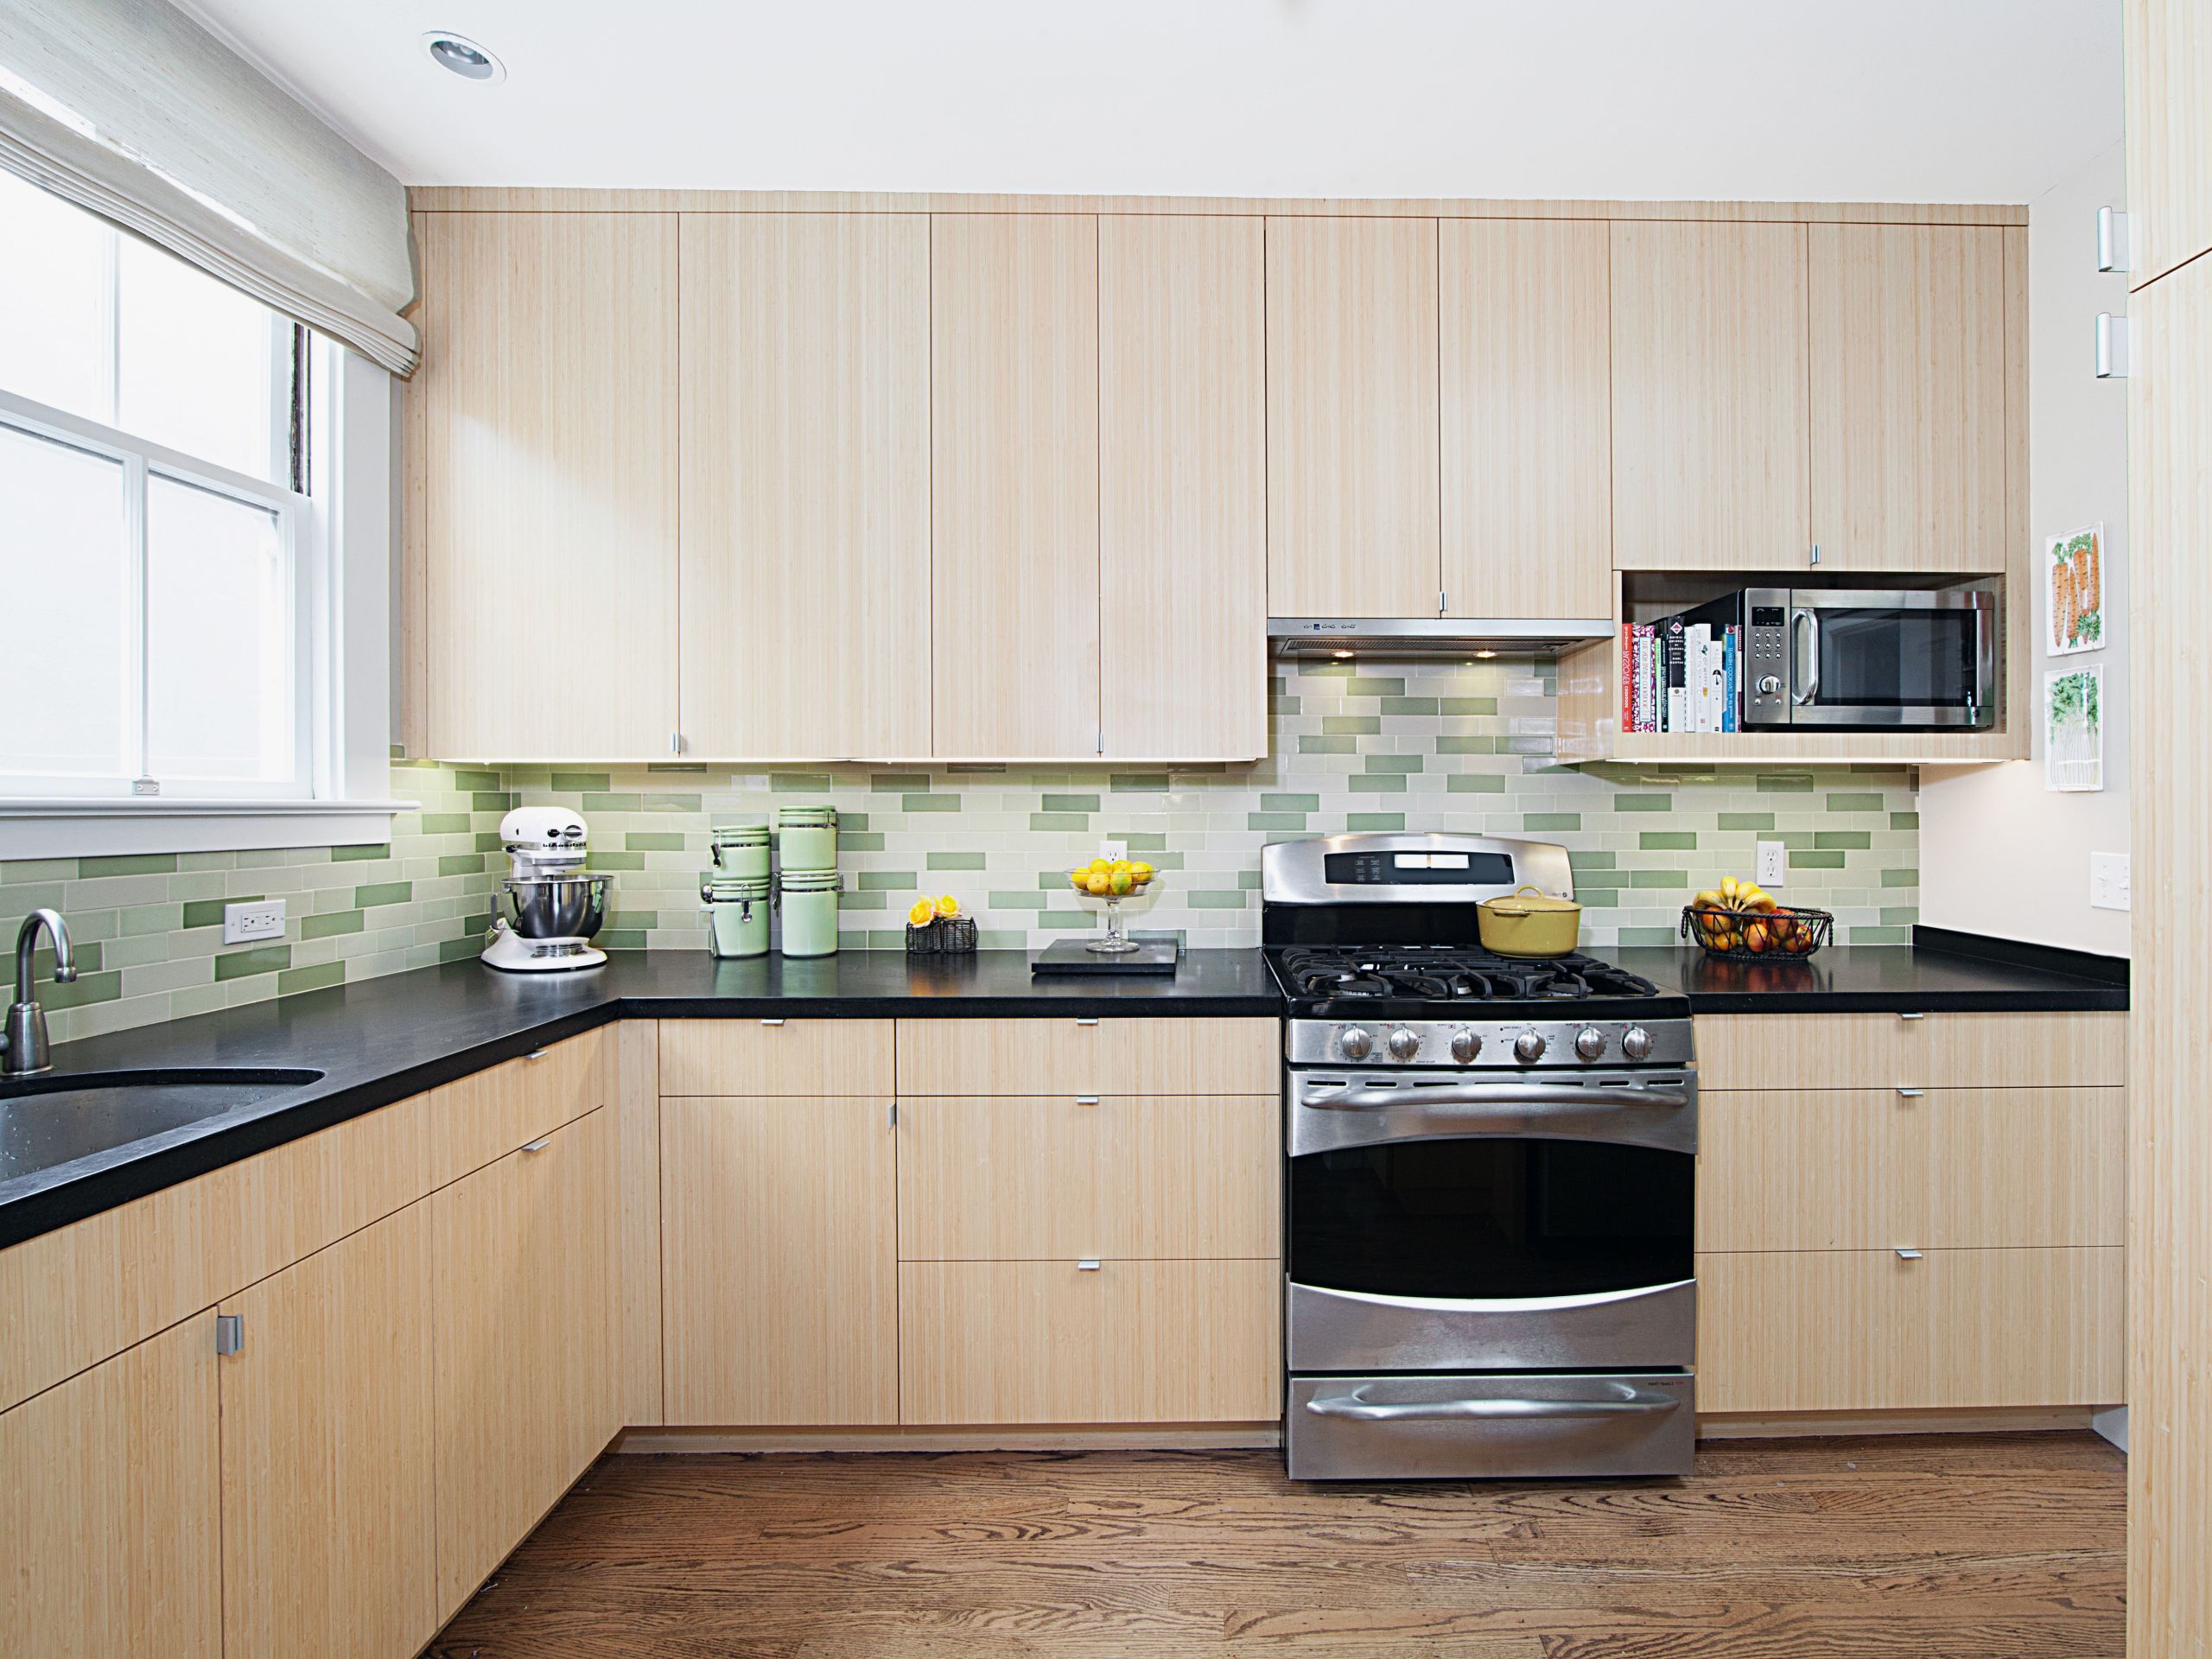 20 Finest Kitchen Sink Backsplashes - Home Decoration and Inspiration Ideas